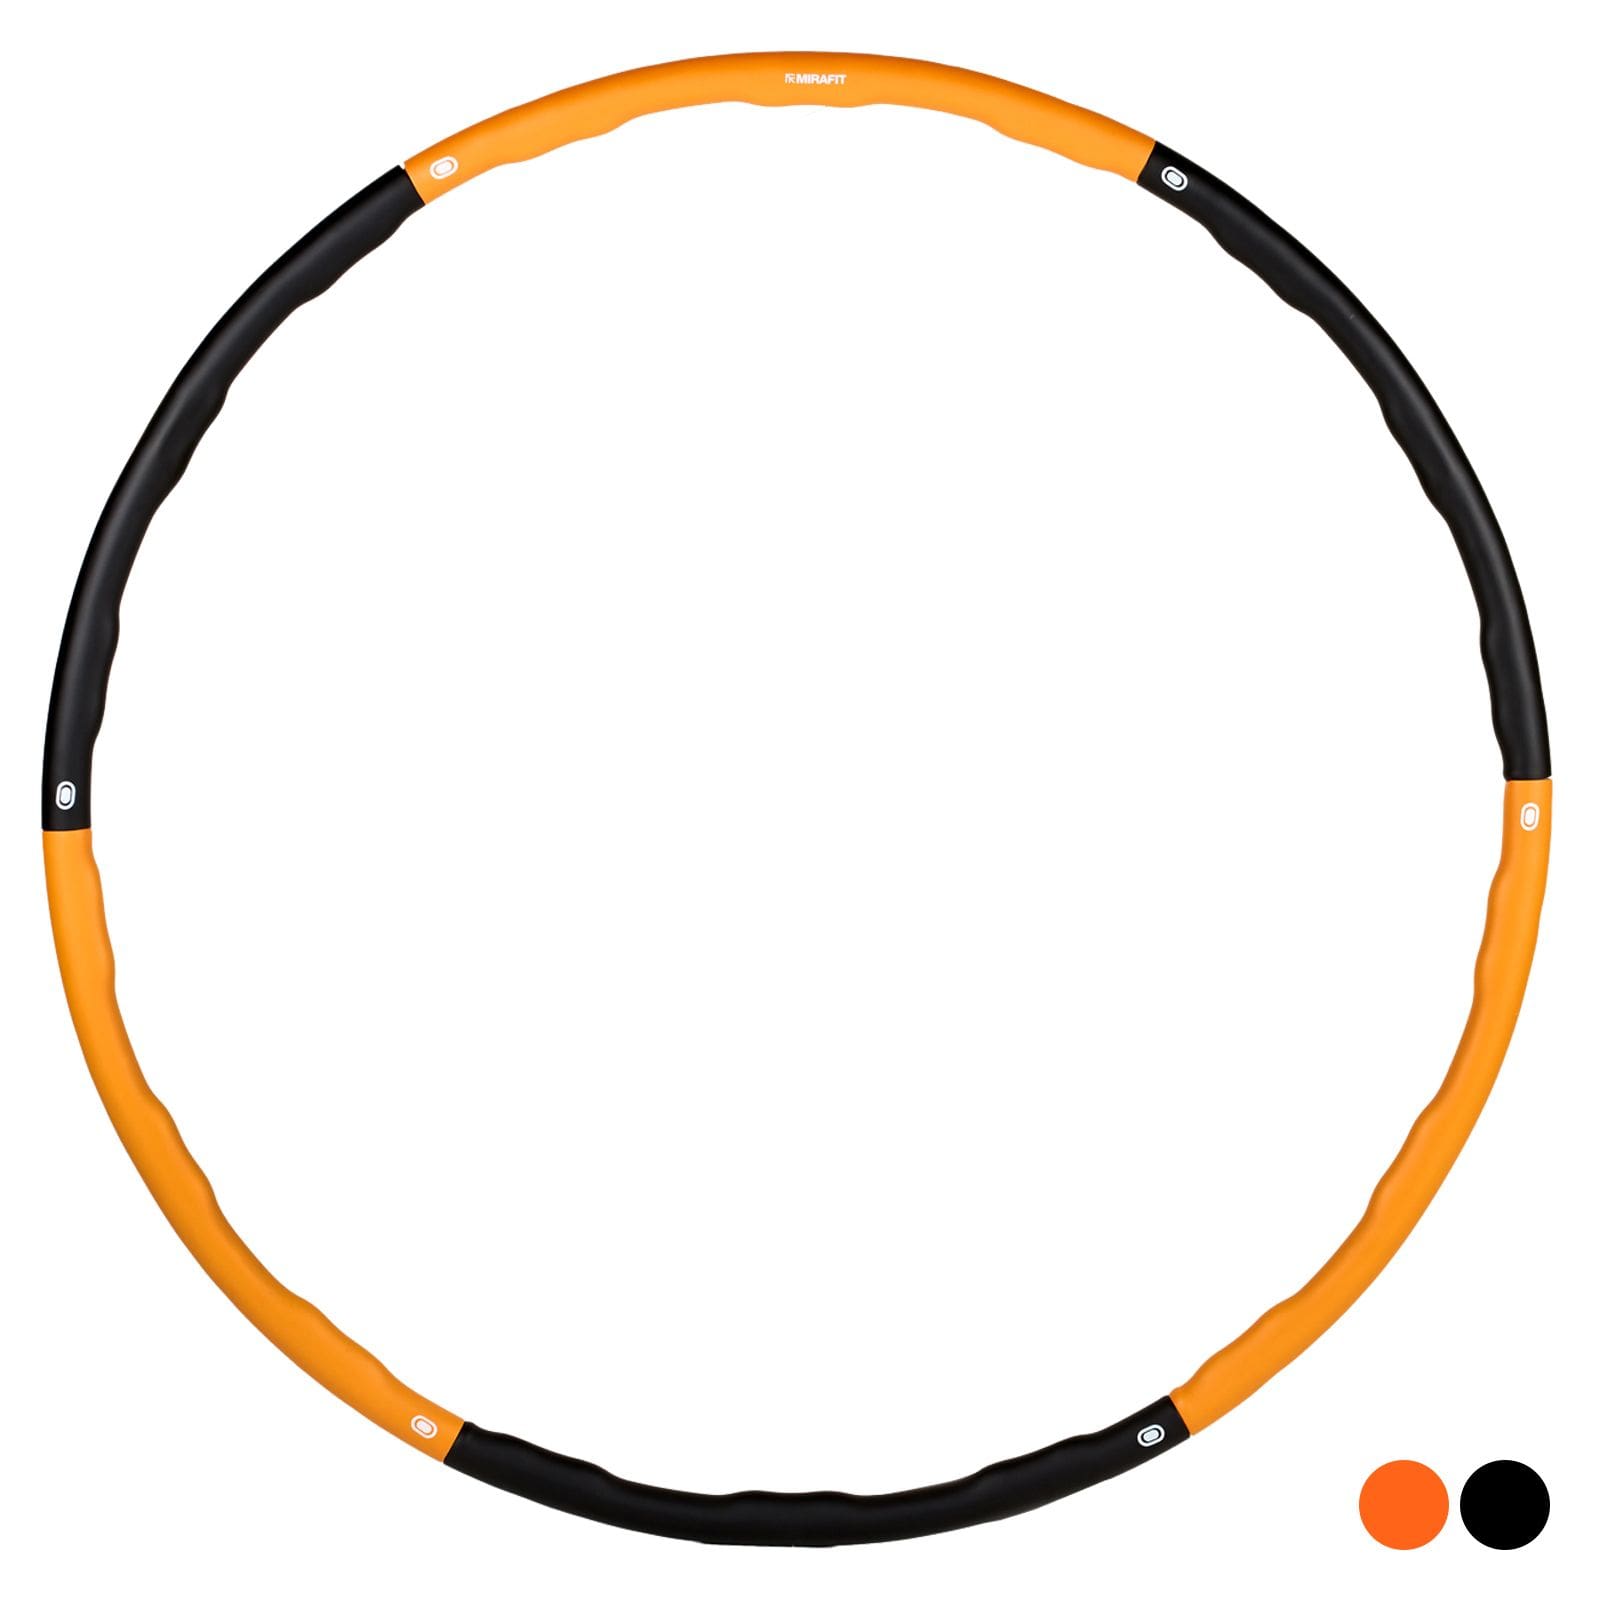 mirafit 1.2kg ridged weighted fitness hula hoop Black and Orange